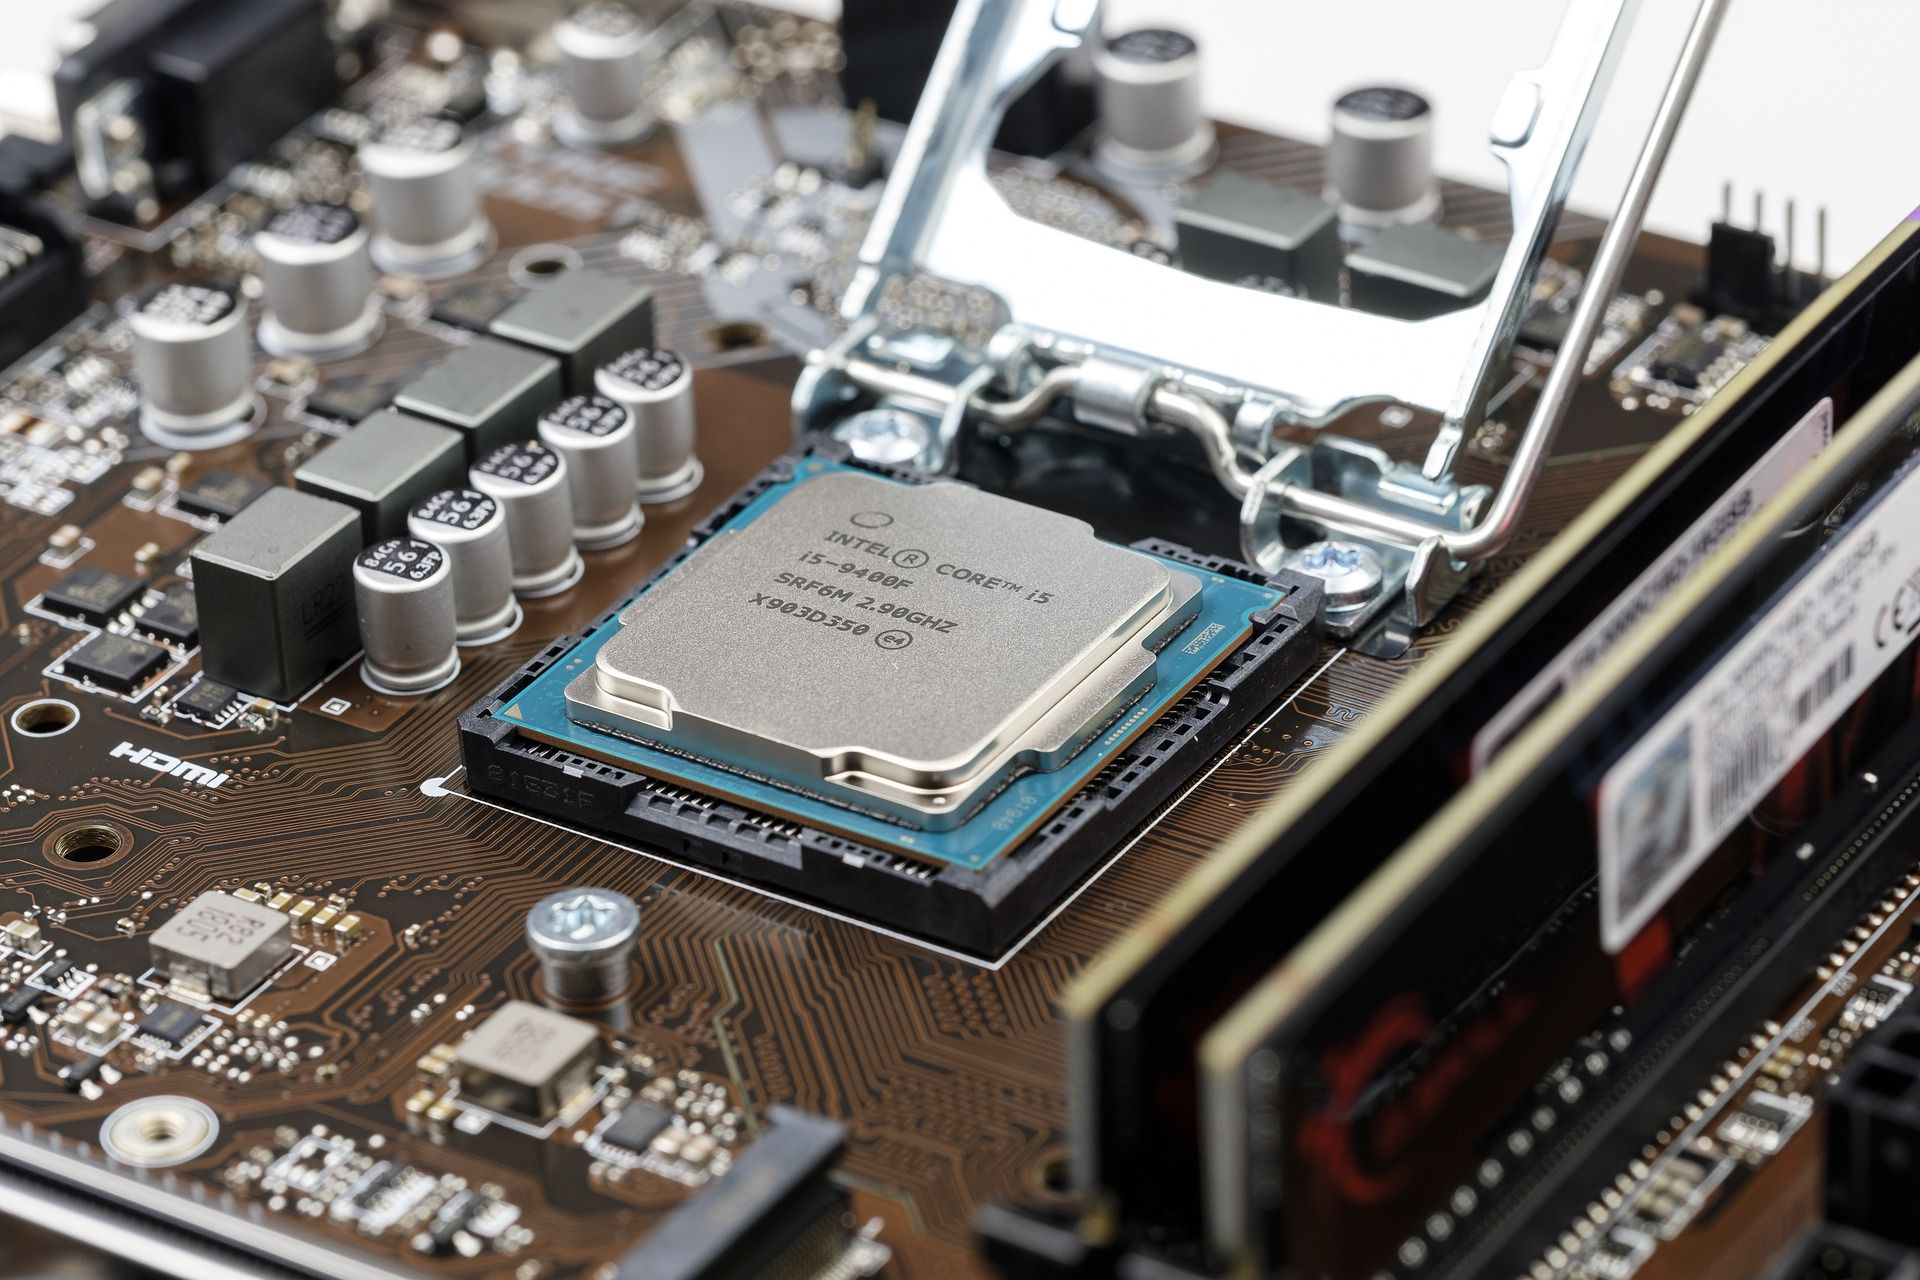 CPU inside motherboard